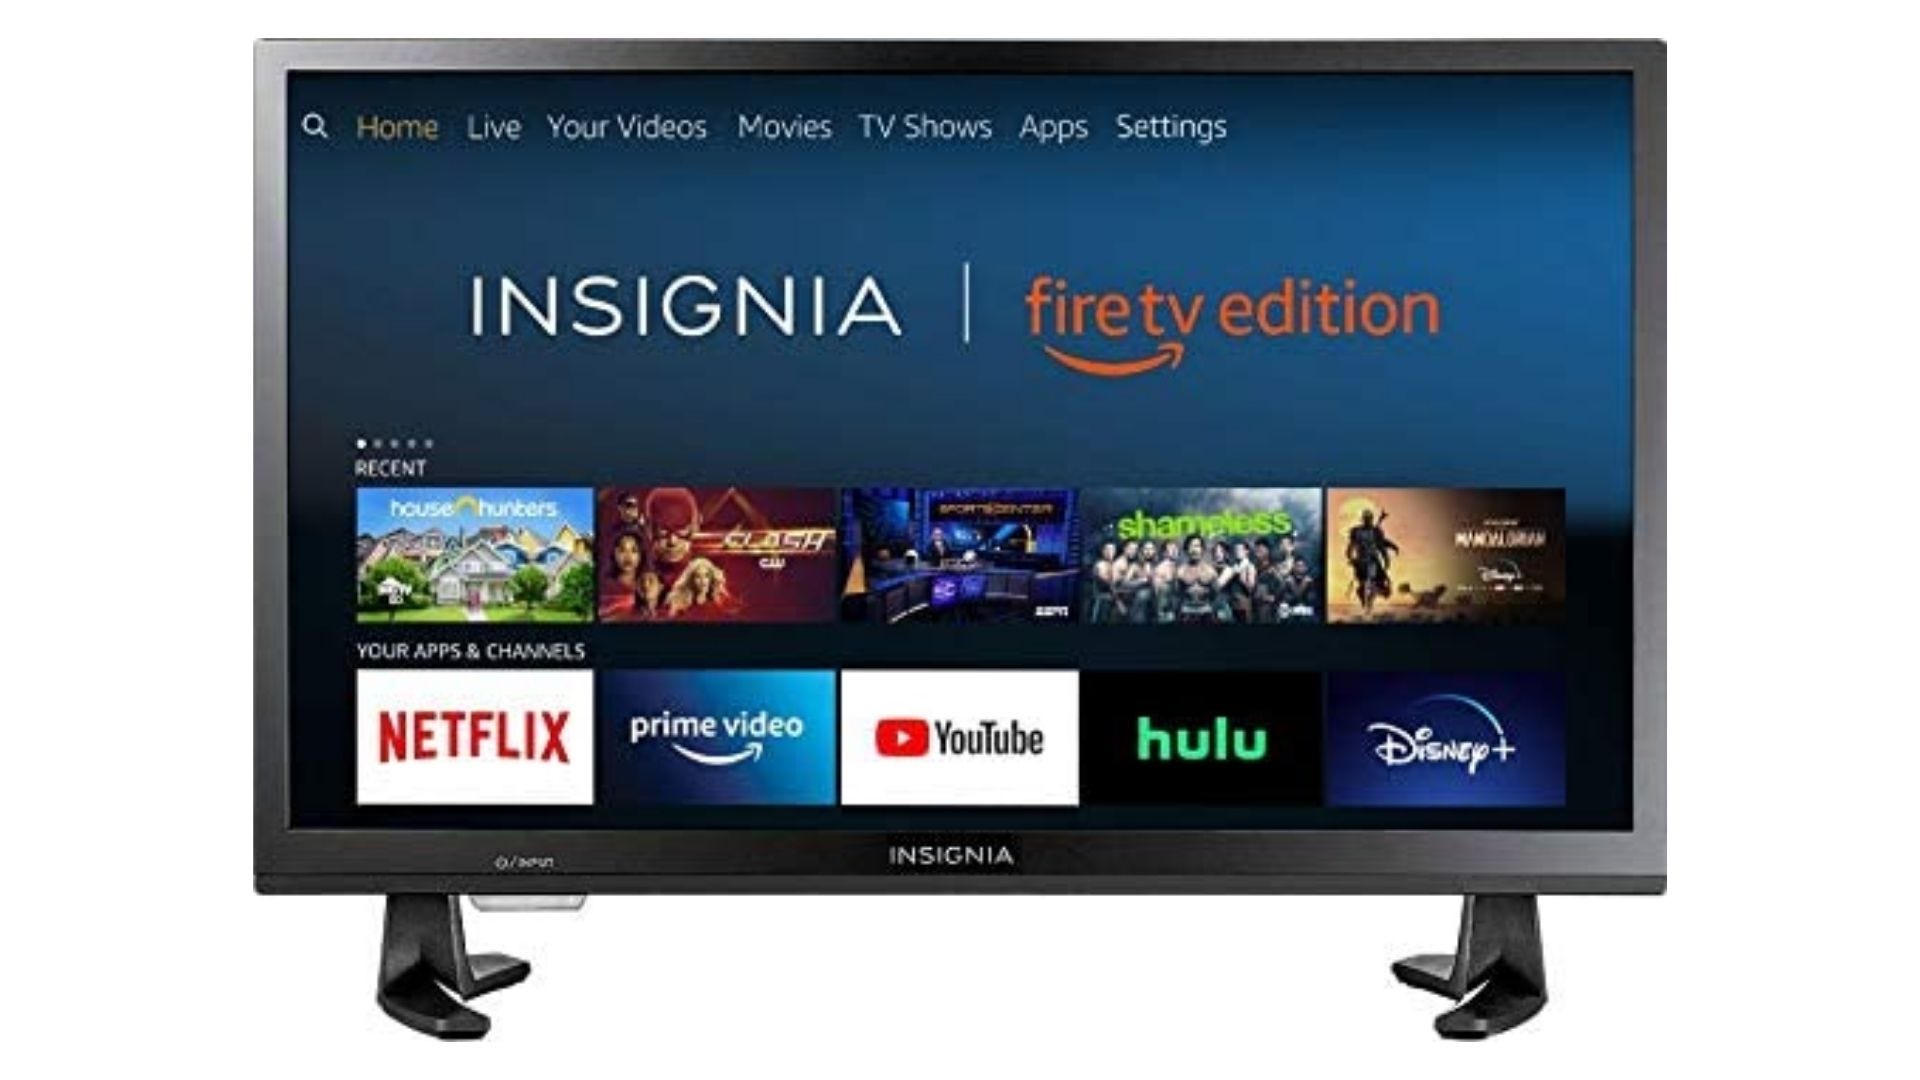 Insignia Smart TV HD 32 inch - Phiên bản Fire TV